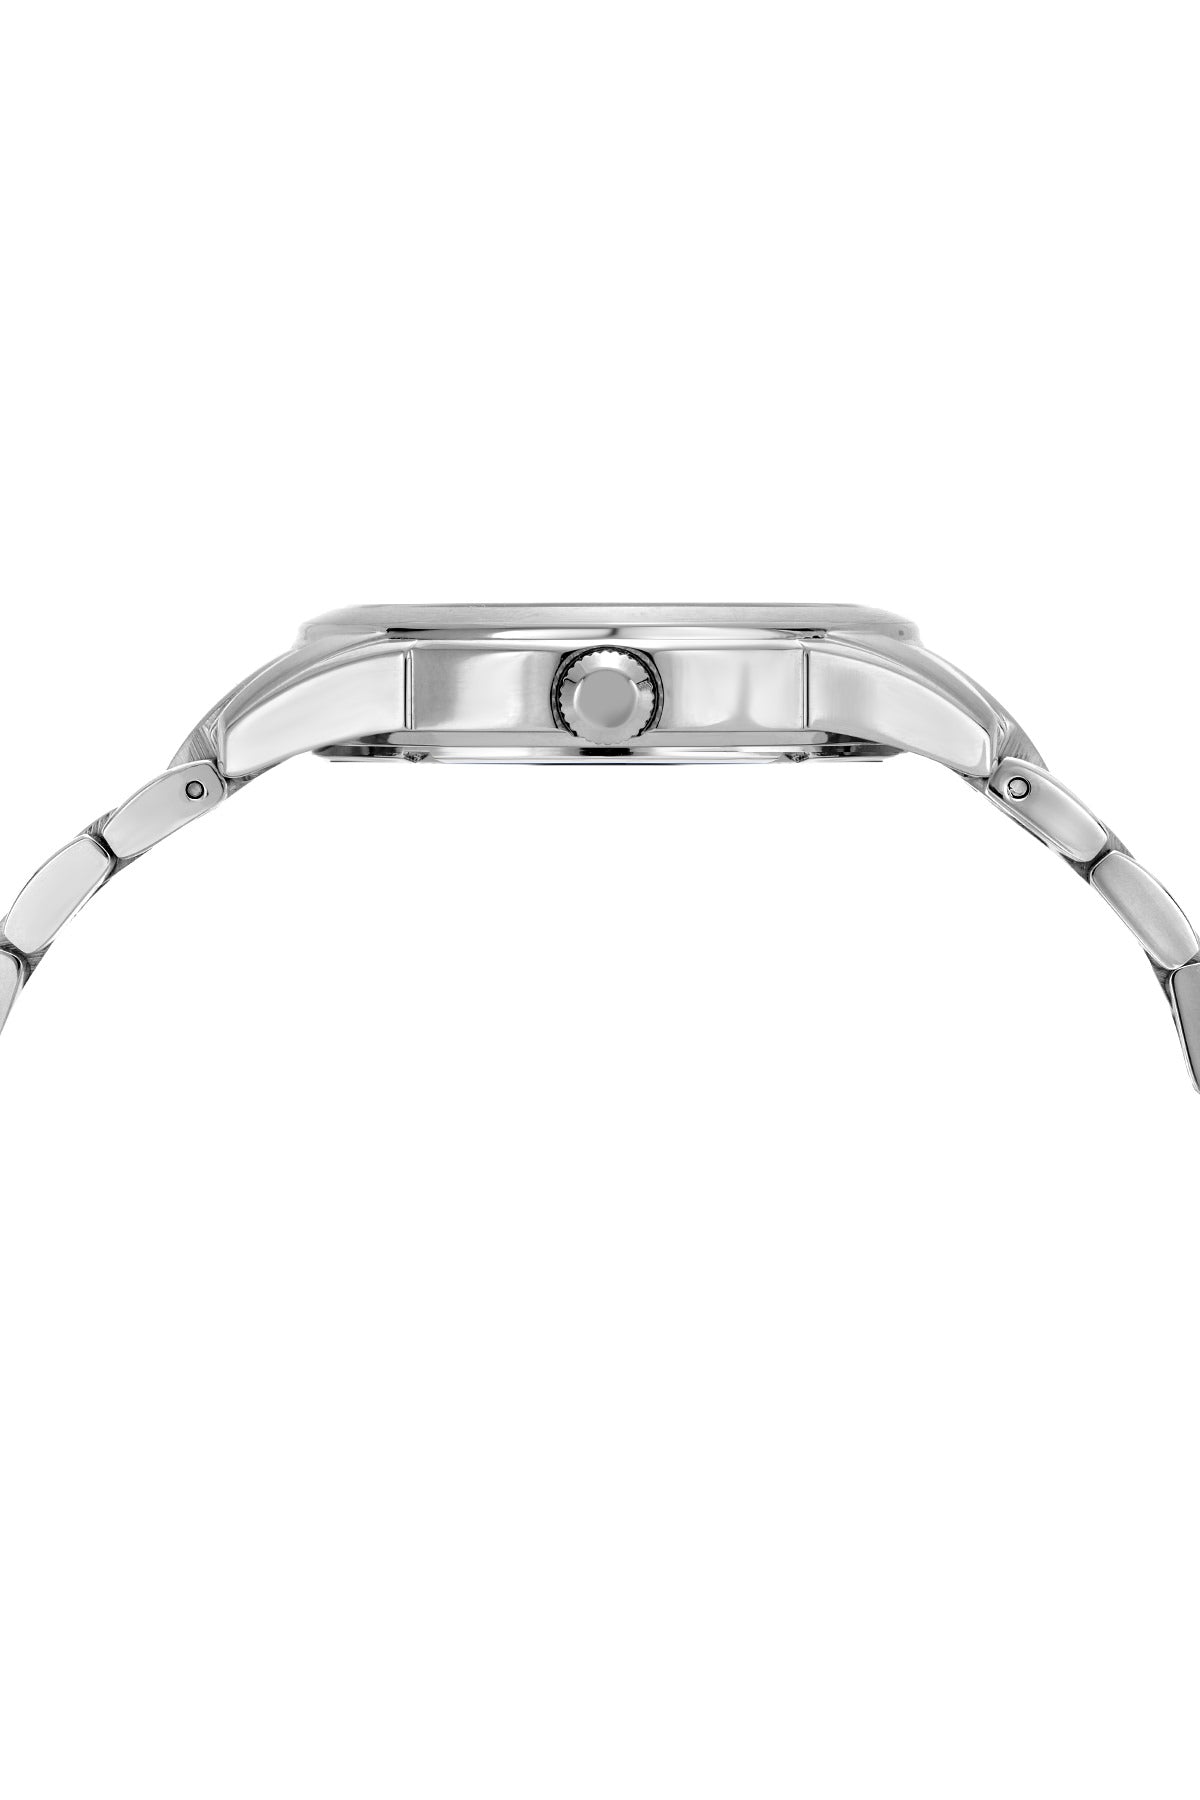 Porsamo Bleu Diana Luxury Diamond Women's Stainless Steel Watch, Silver 741ADIS